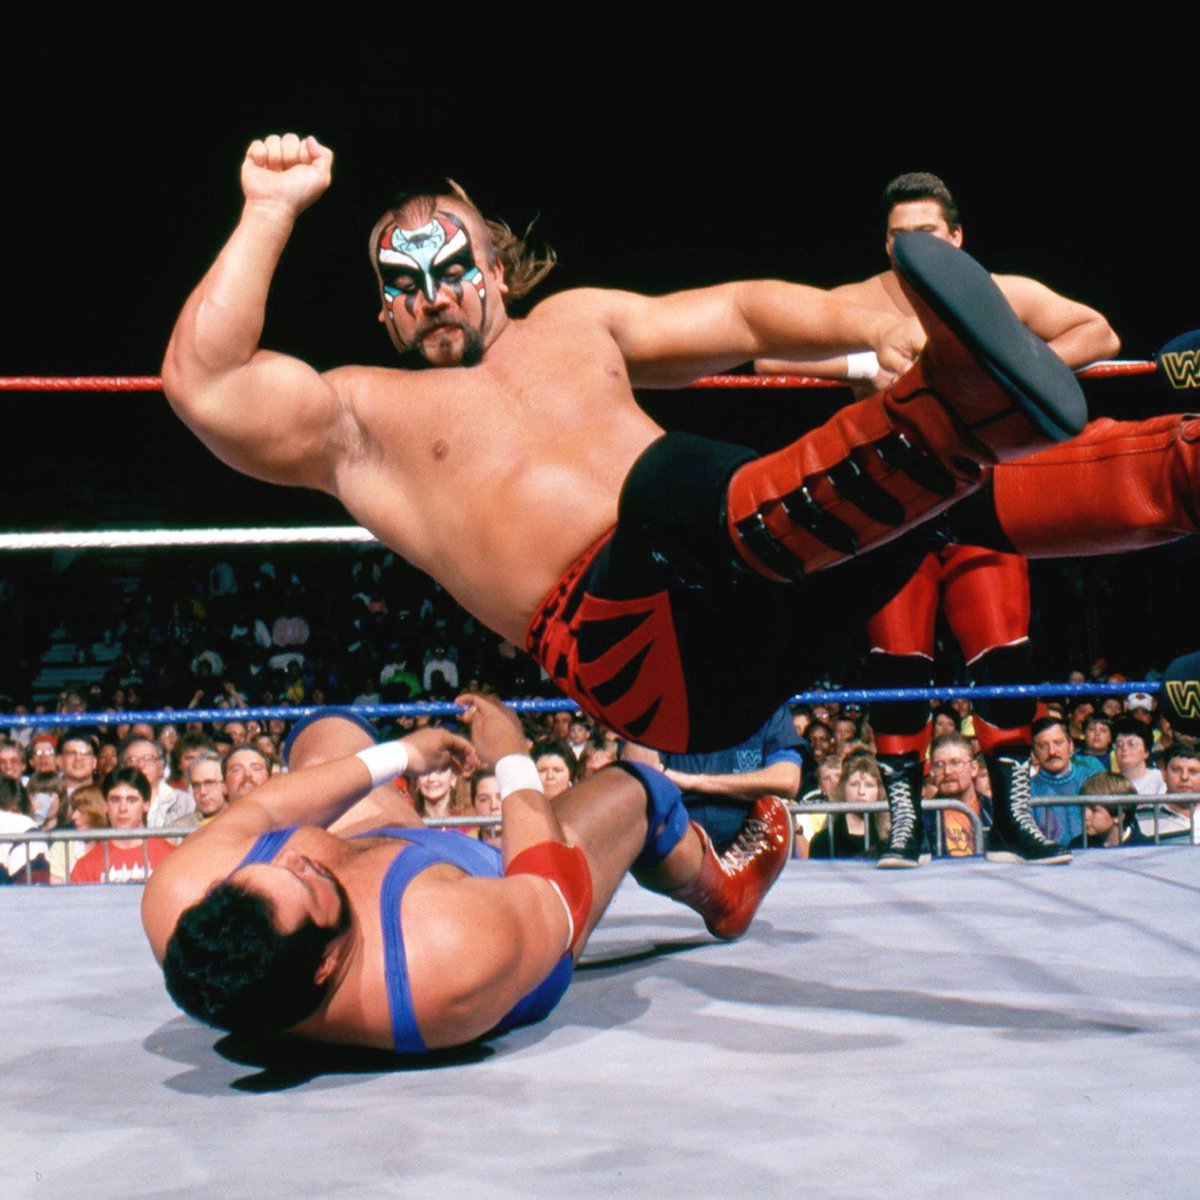 📸 WWF Action Shot! #WWF #WWE #Wrestling #RoadWarriorAnimal #LegionofDoom